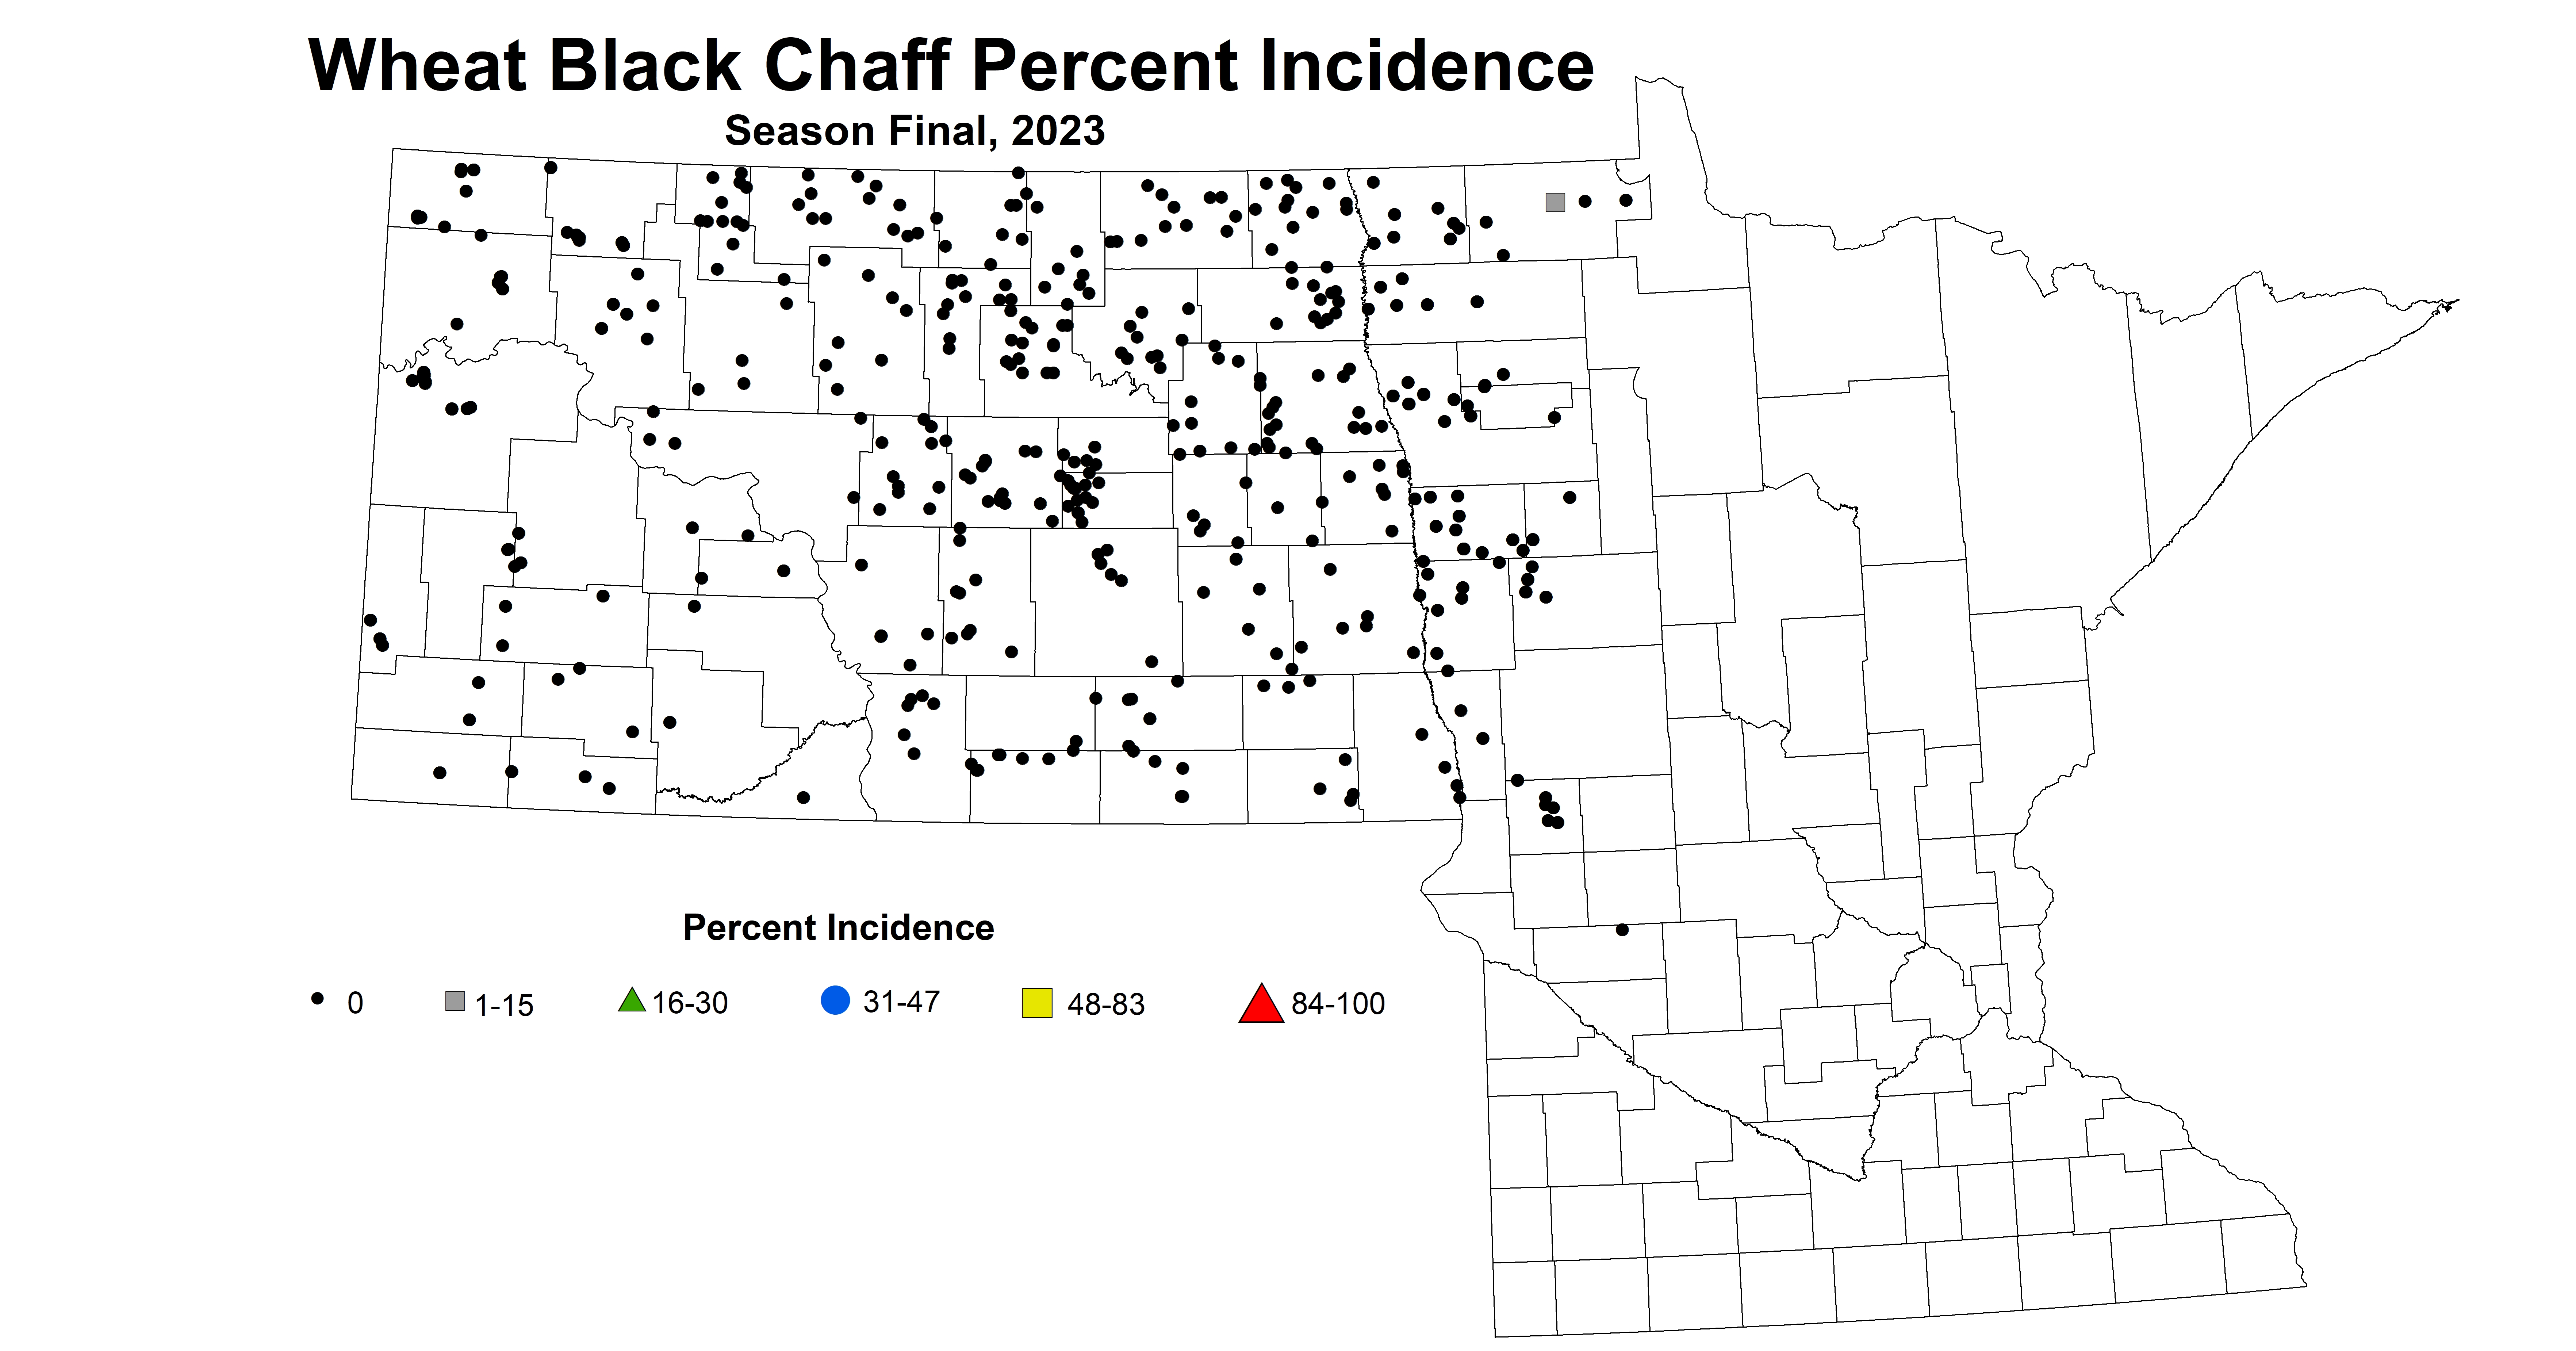 wheat black chaff incidence season final 2023